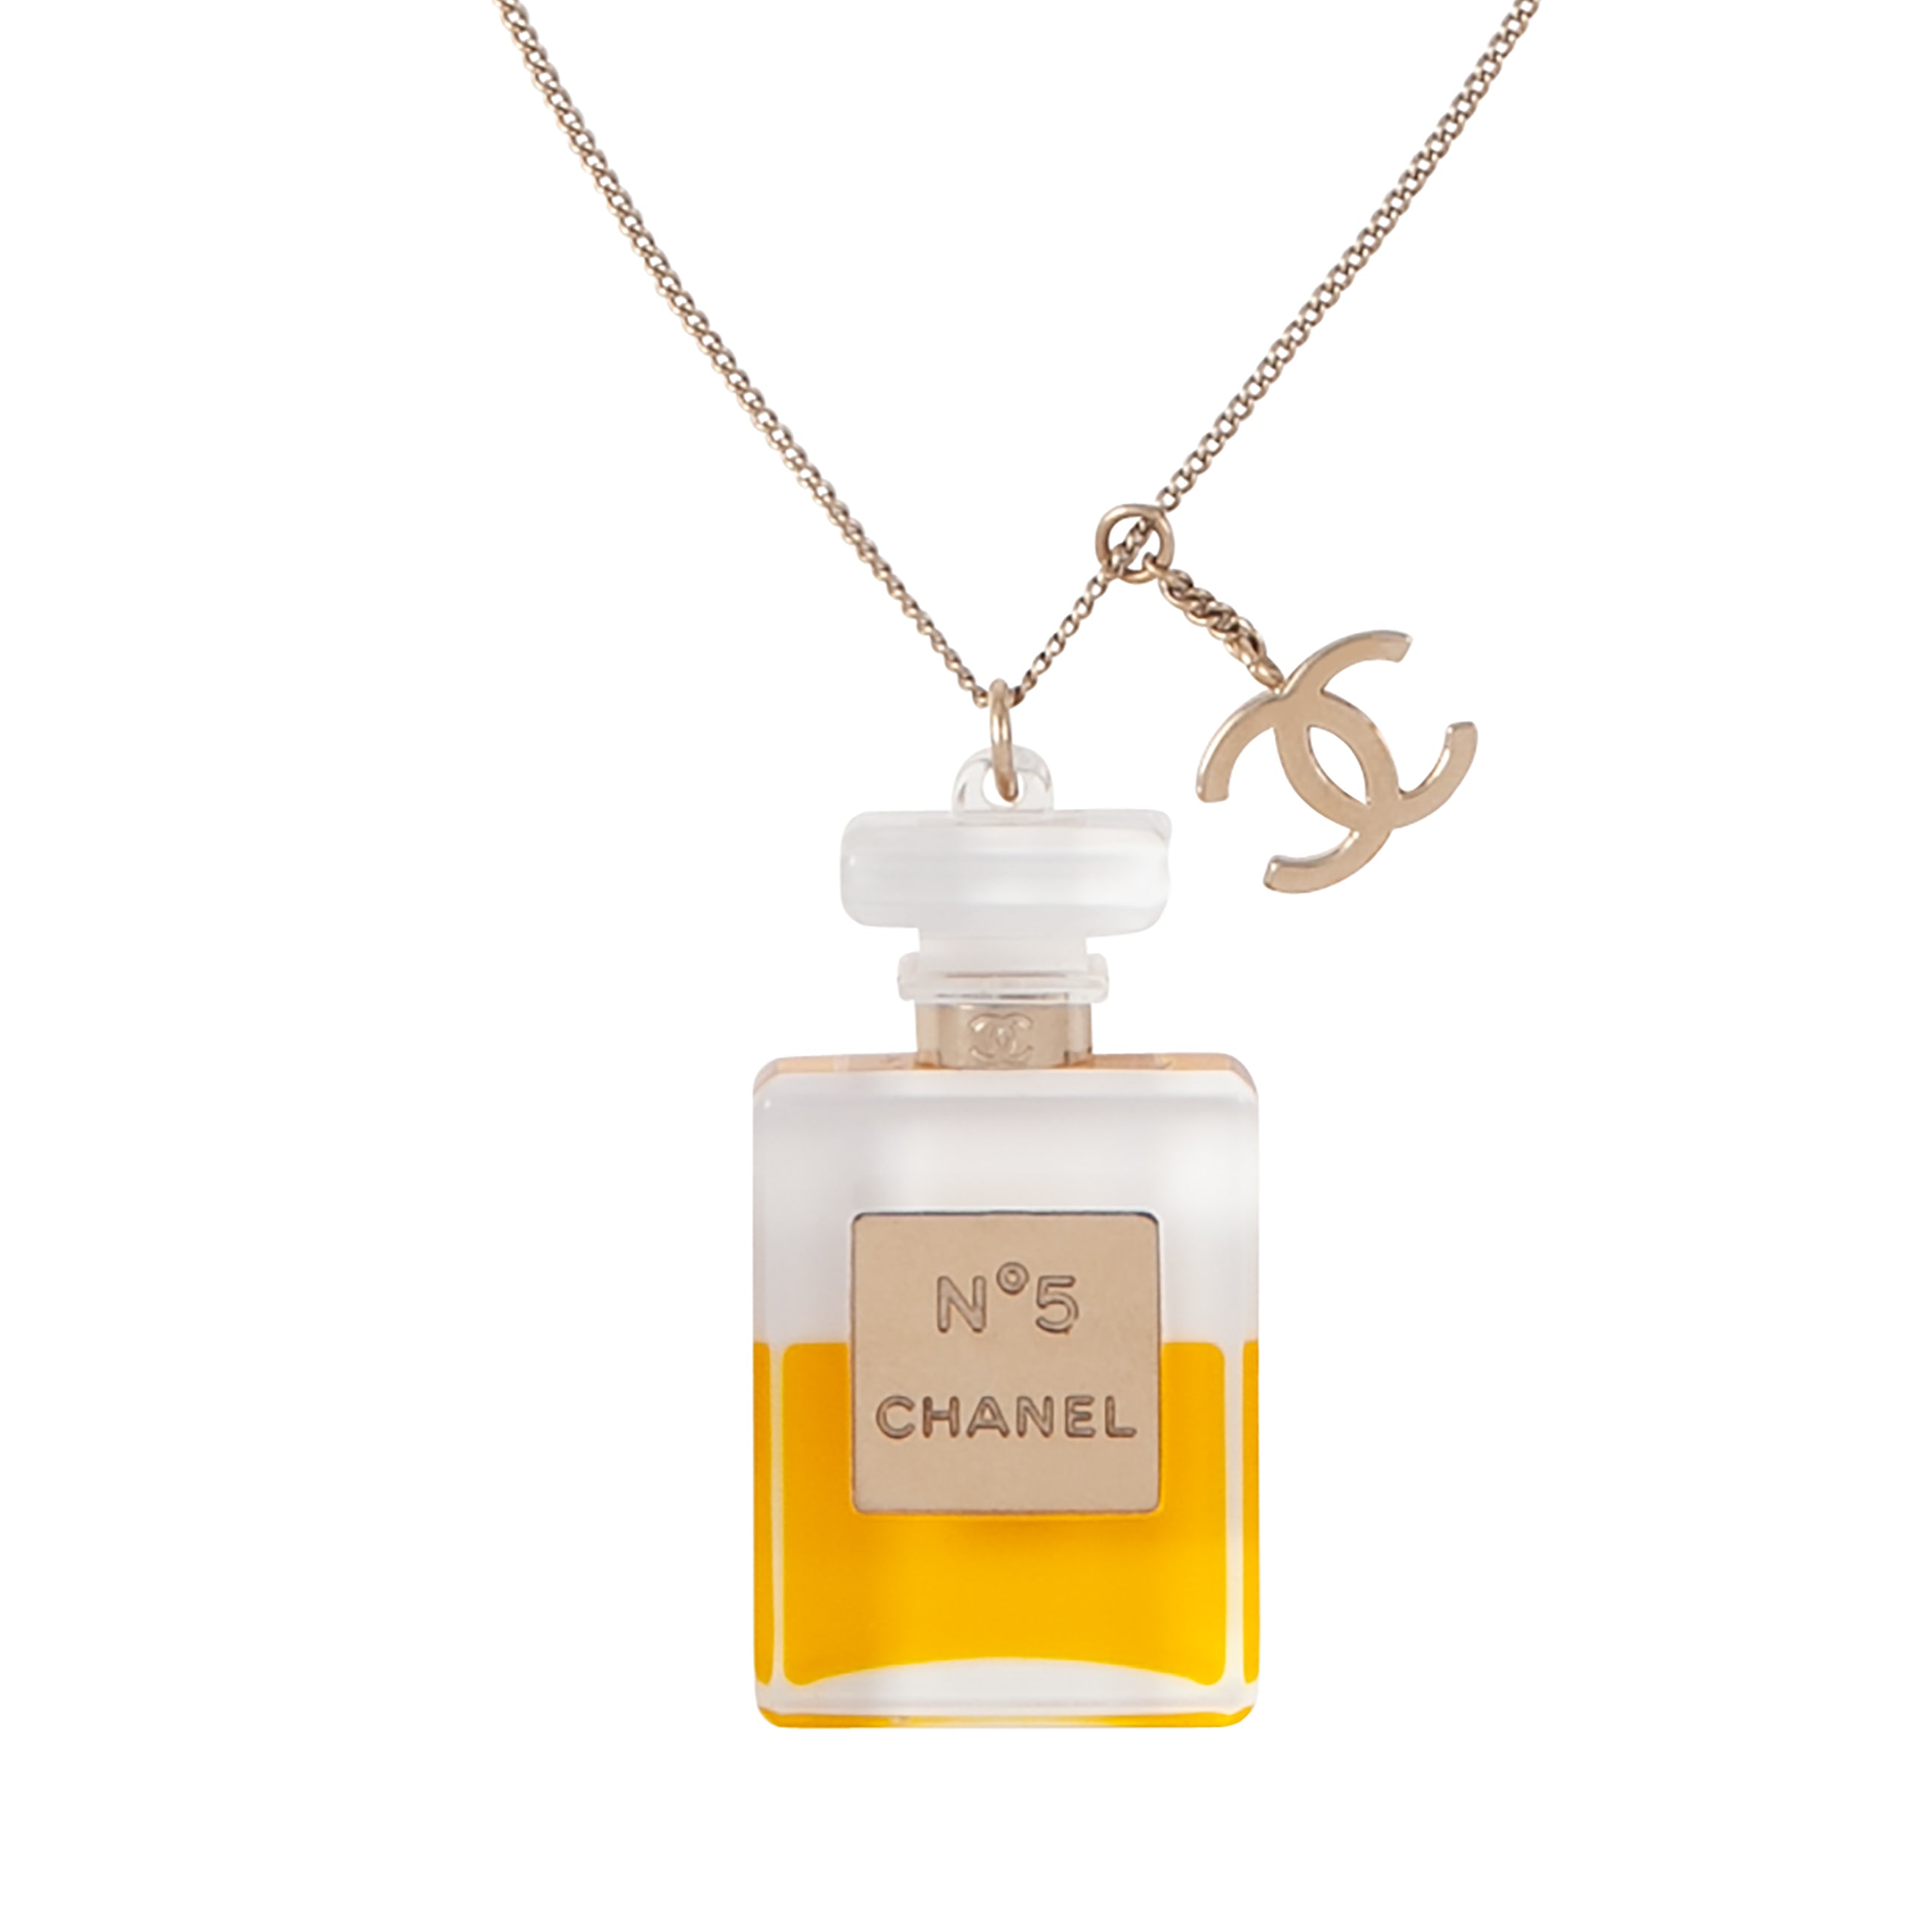 2008 Chanel No 5 Perfume Bottle Pendant